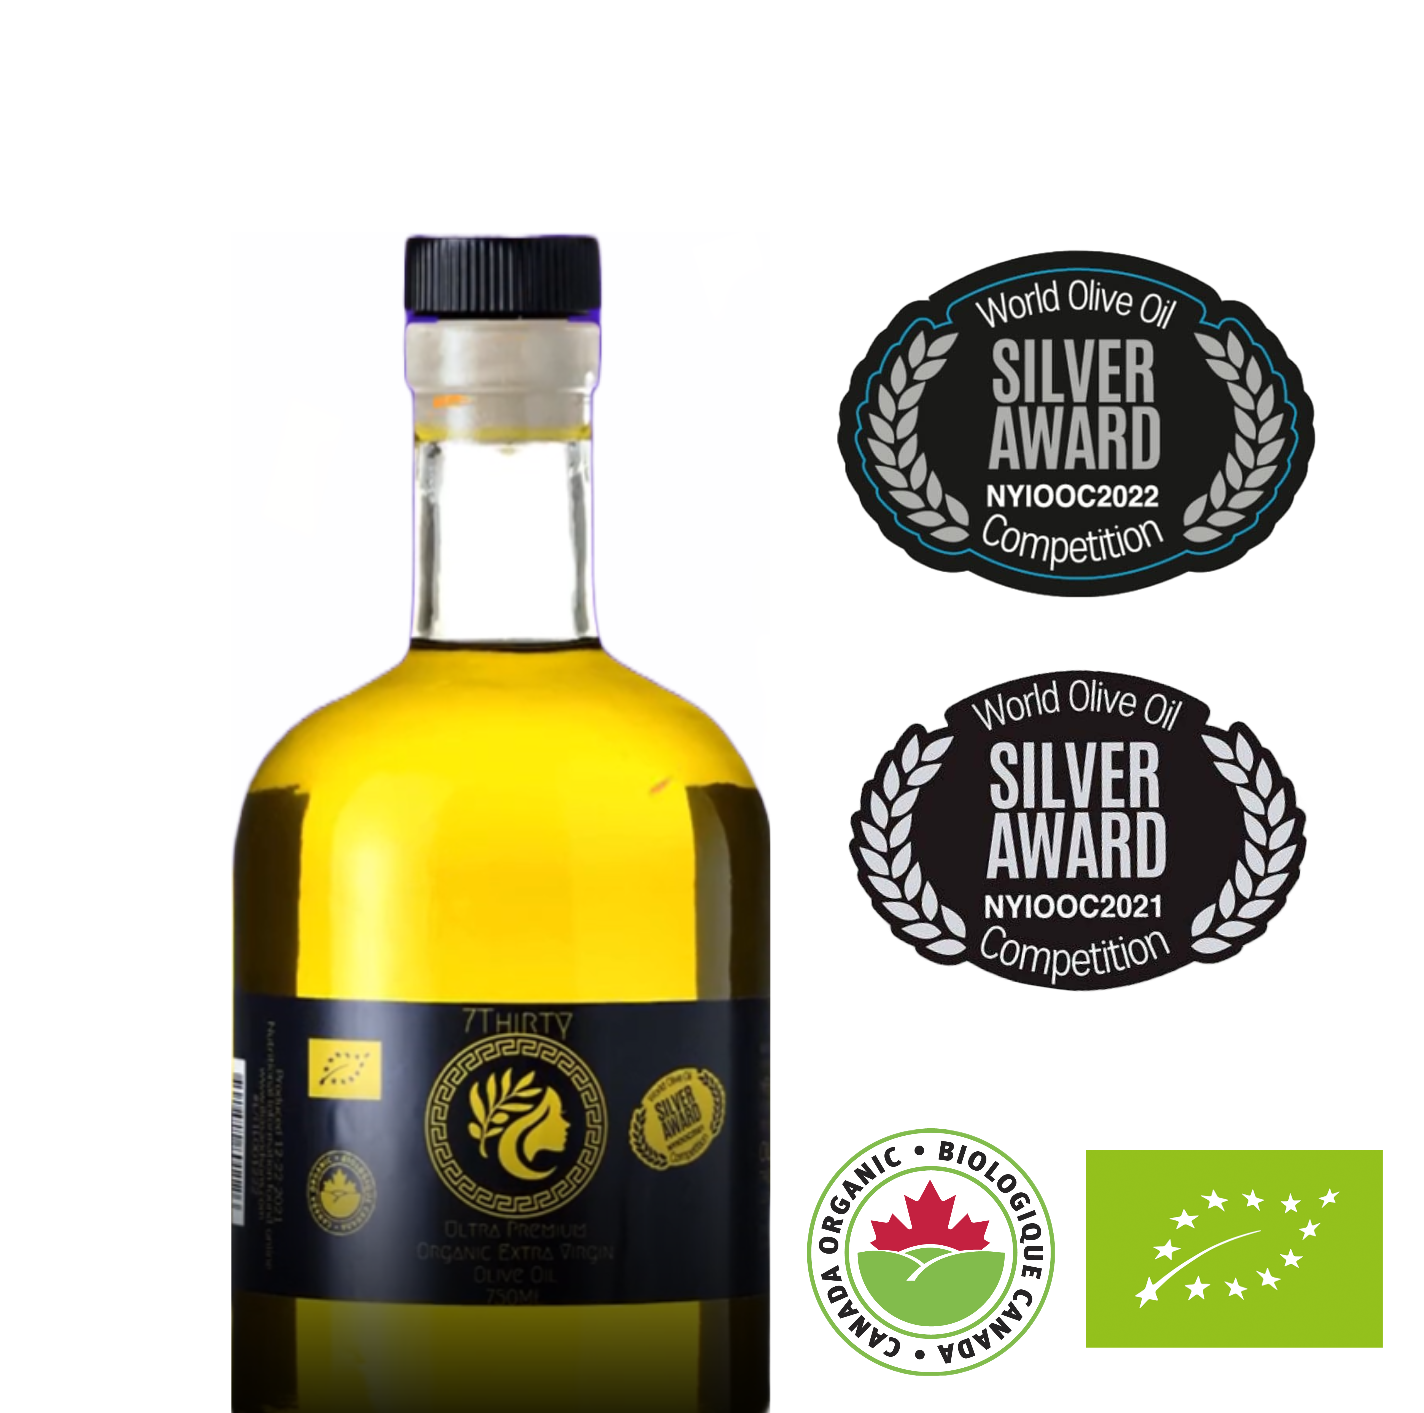 Huile d'olive extra vierge bio 7Thirty High Phenolic Ultra Premium